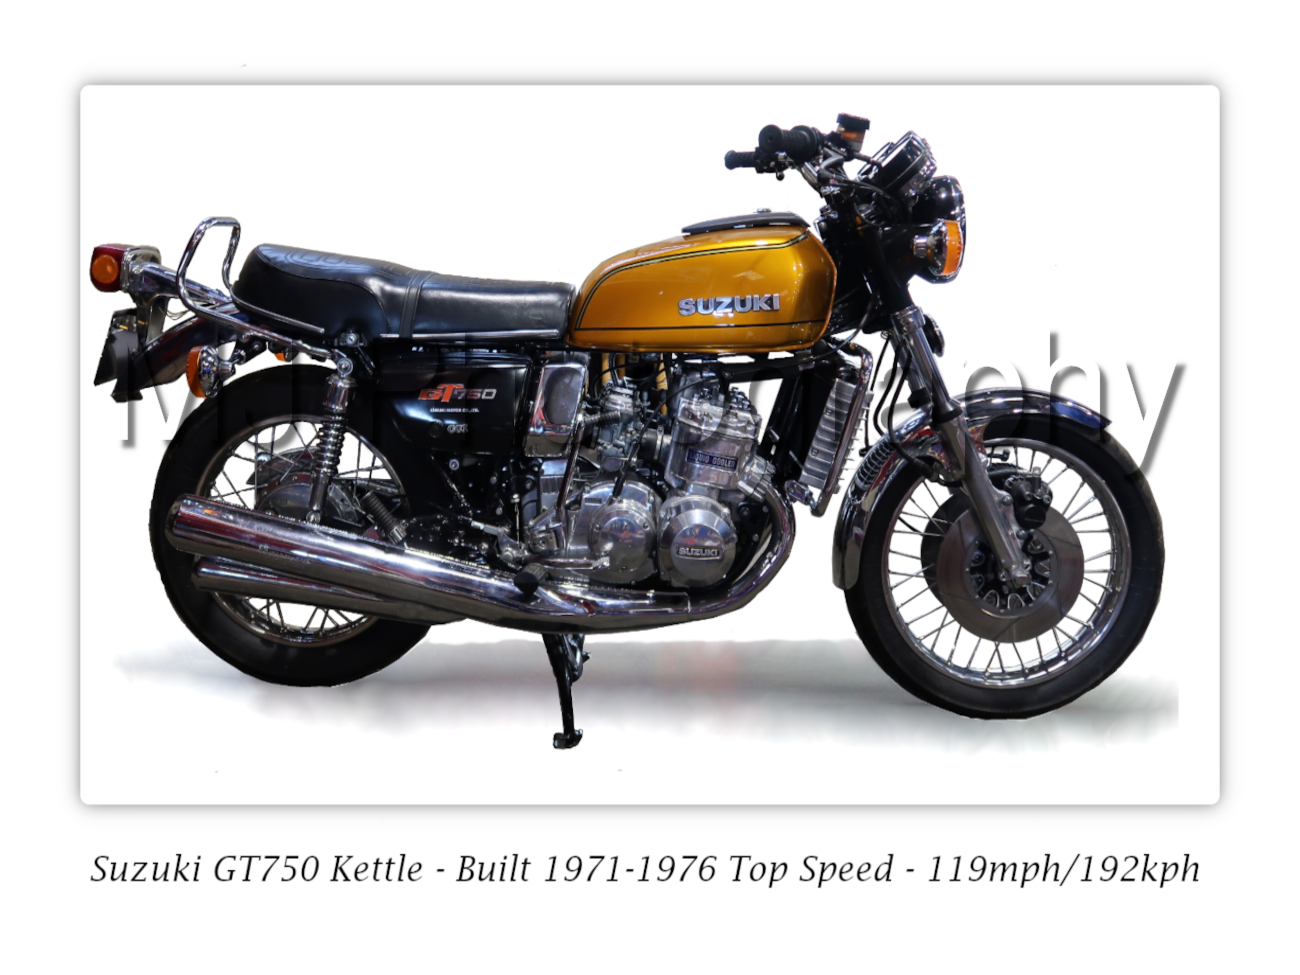 Suzuki GT750B (Kettle) Motorcycle - A3/A4 Poster/Print